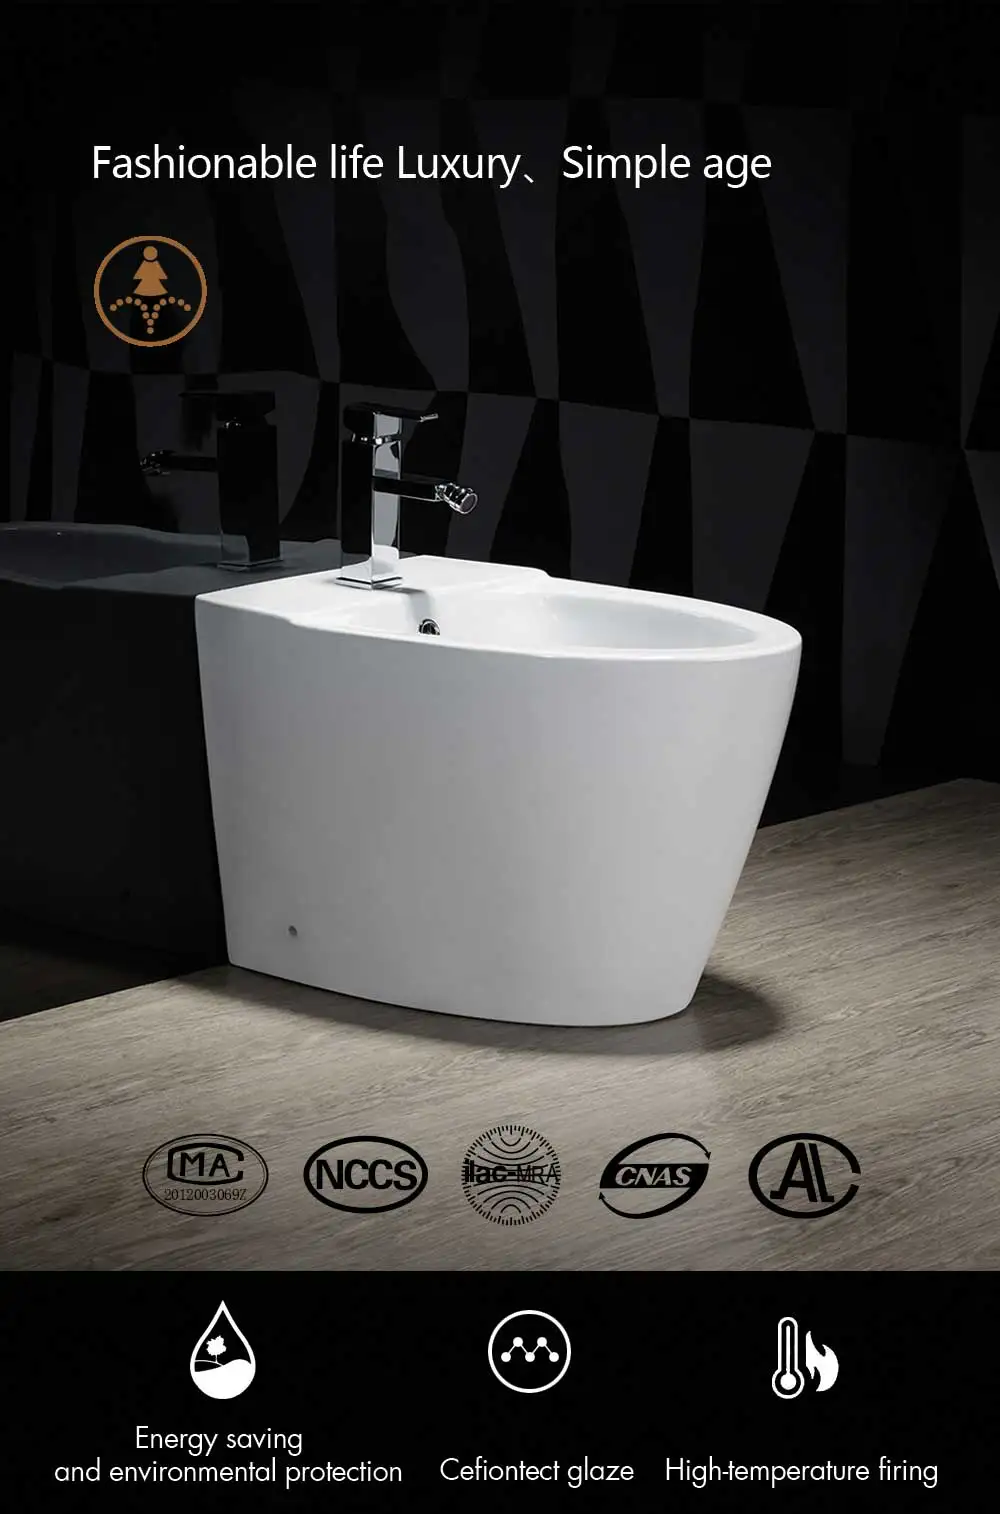 Professional sell smooth luster toilet ceramic bathroom bidet wc